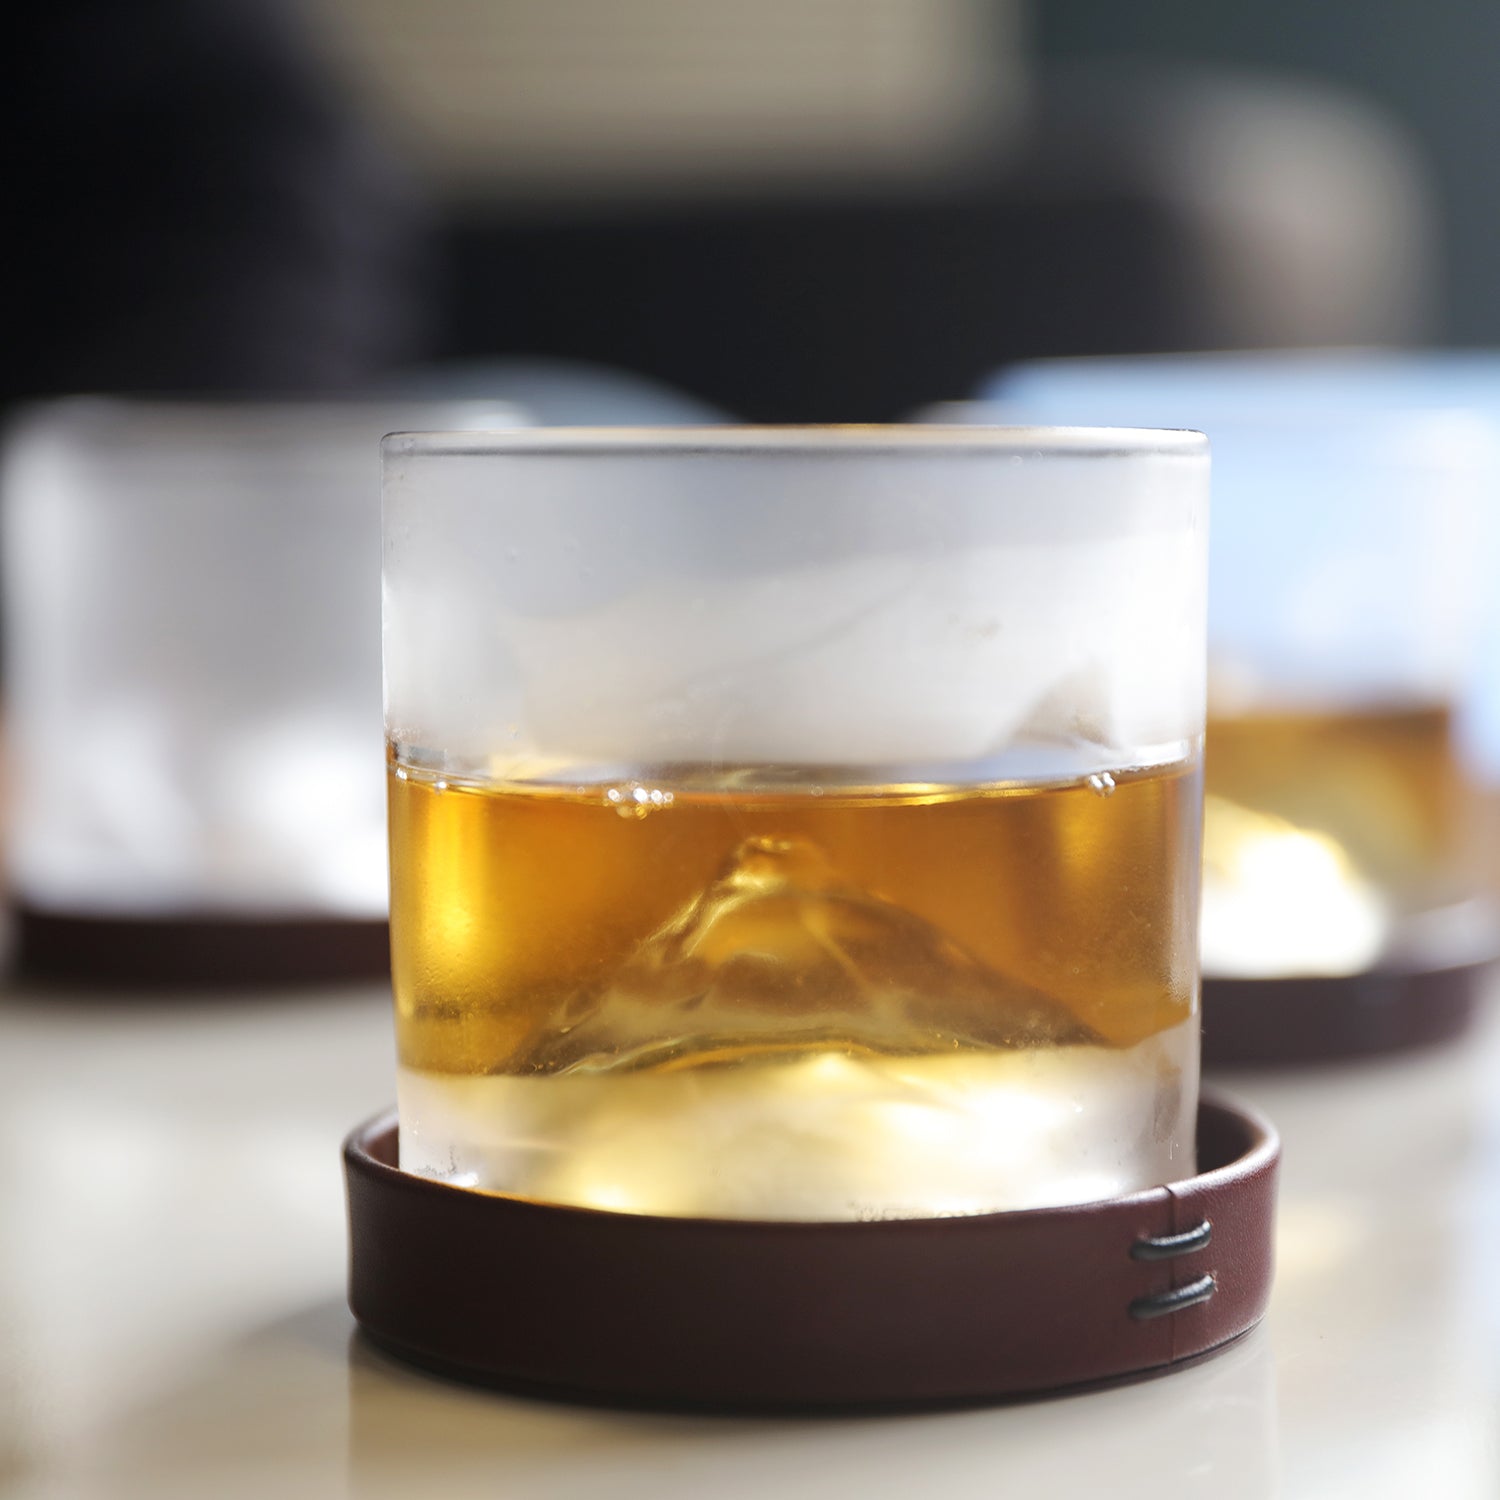 Fuji Crystal Whiskey Glasses Set of 2 - Liiton –